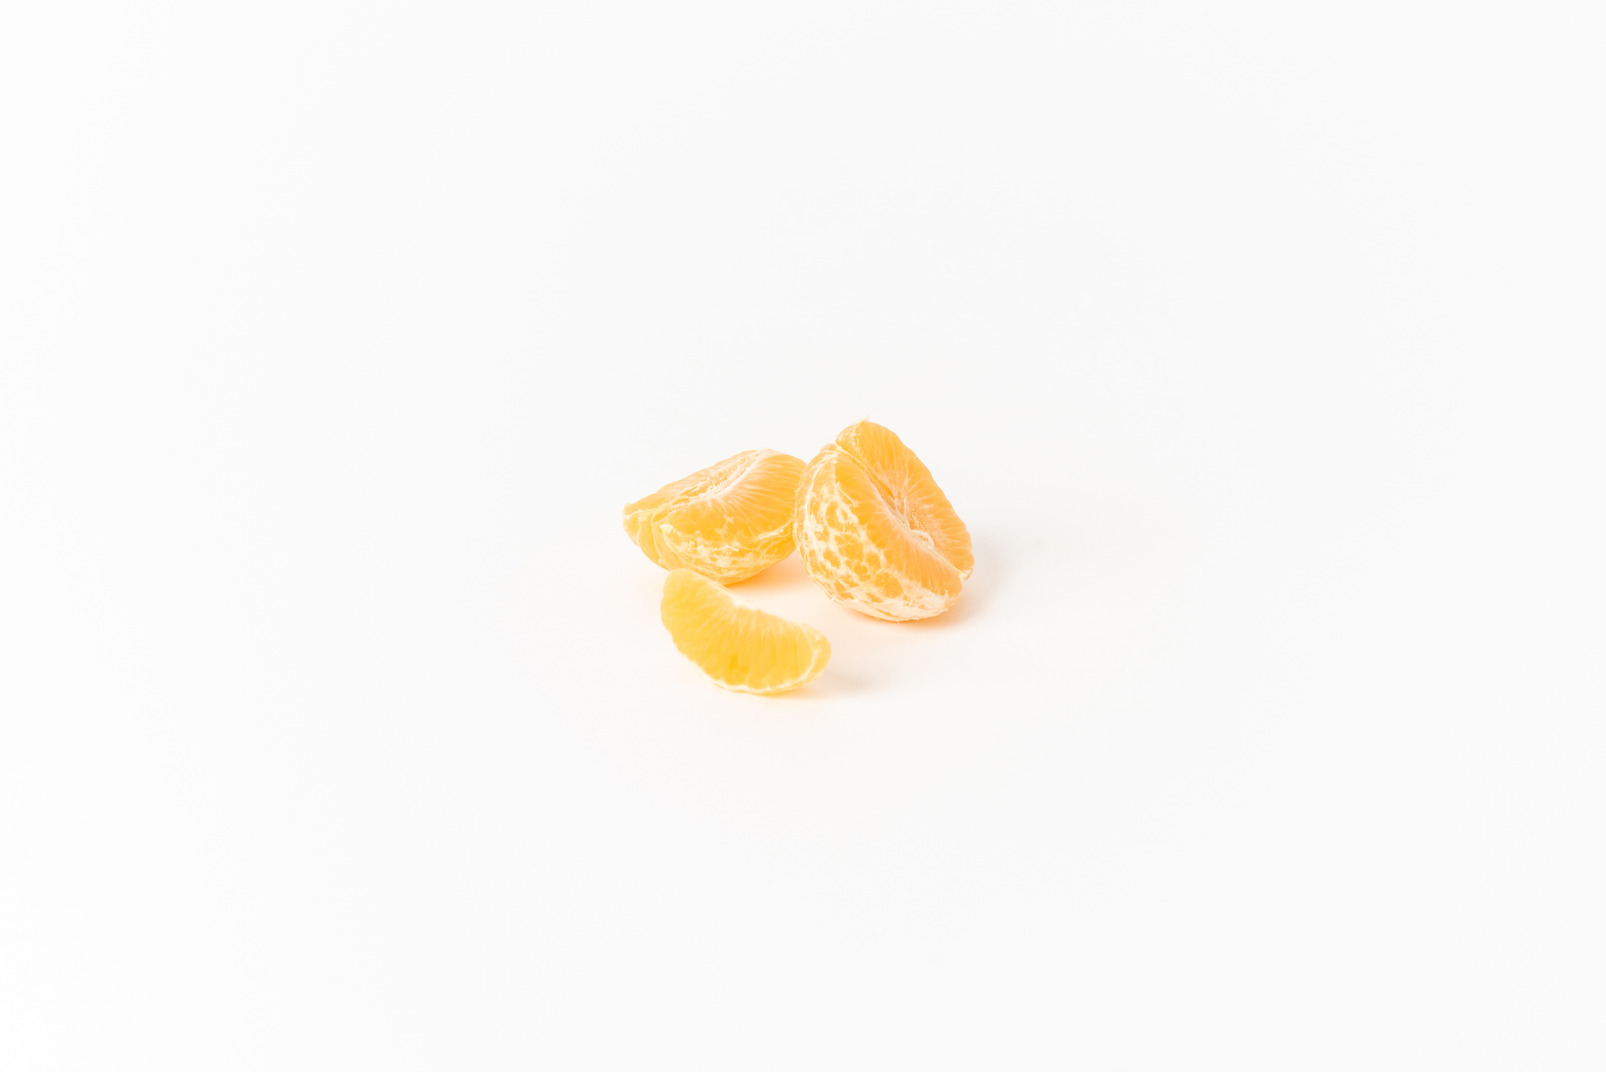 Peeled mandarin segments on a white background